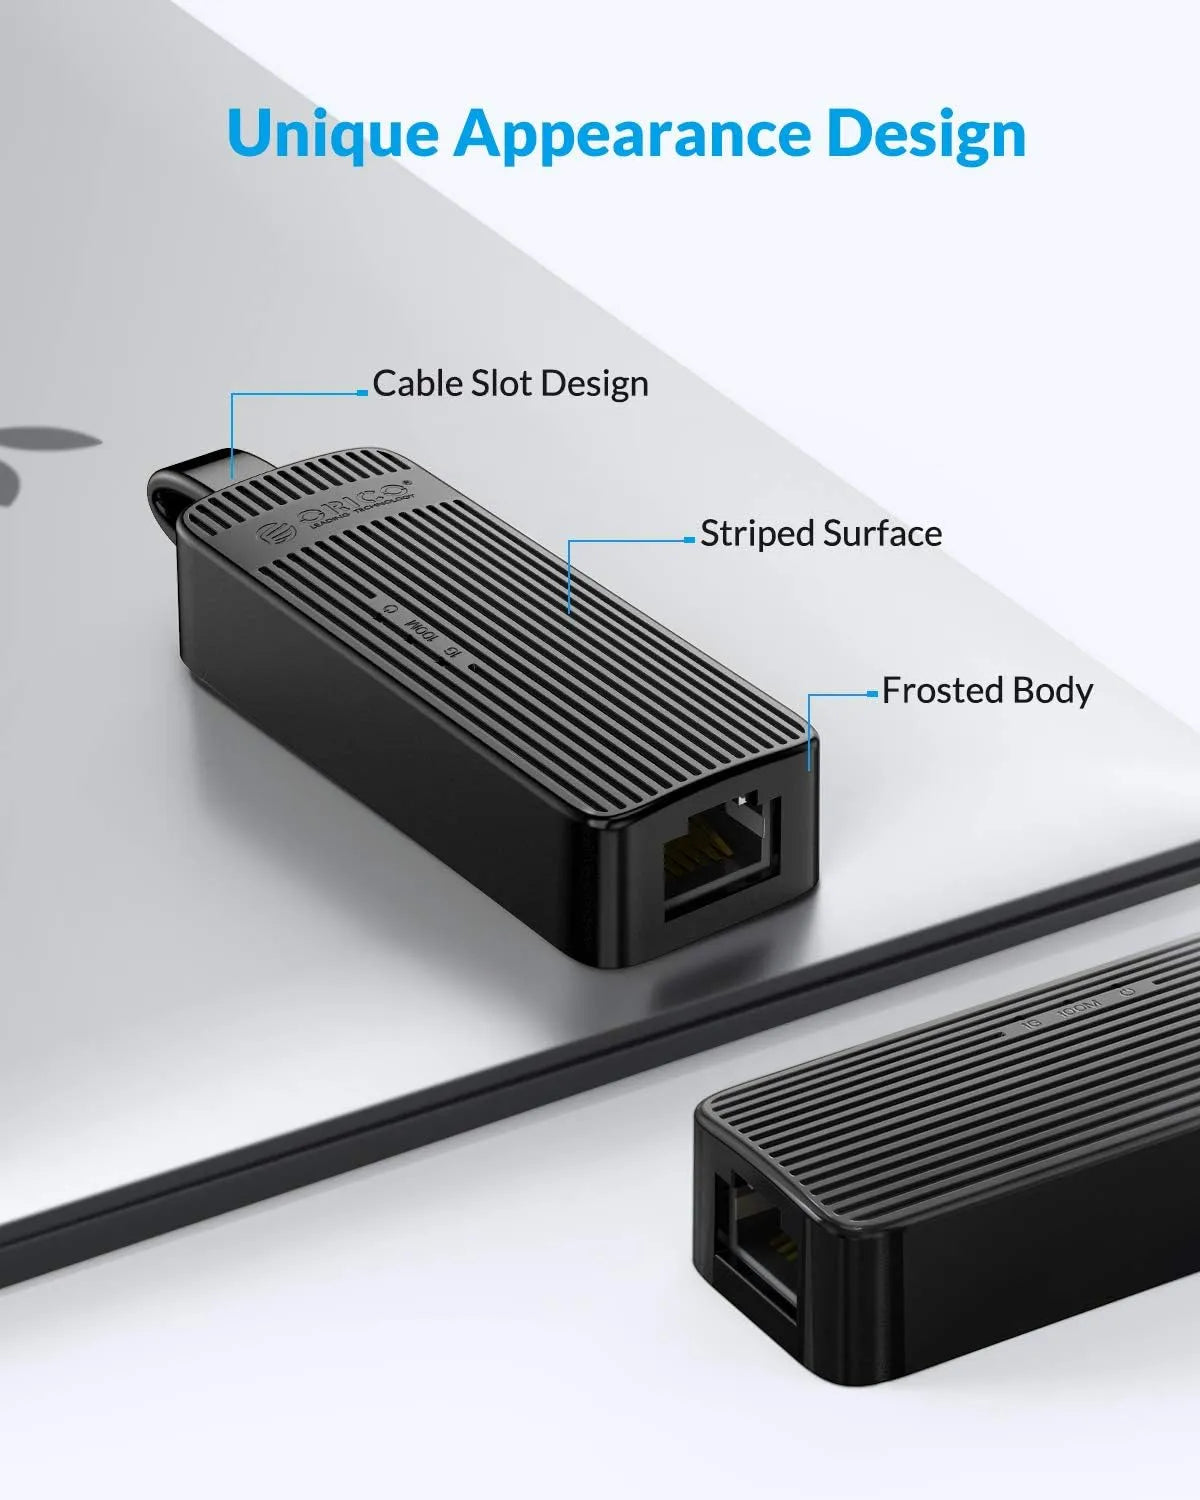 Orico UTK-U3 USB Type-A to Ethernet Adapter 1Gb